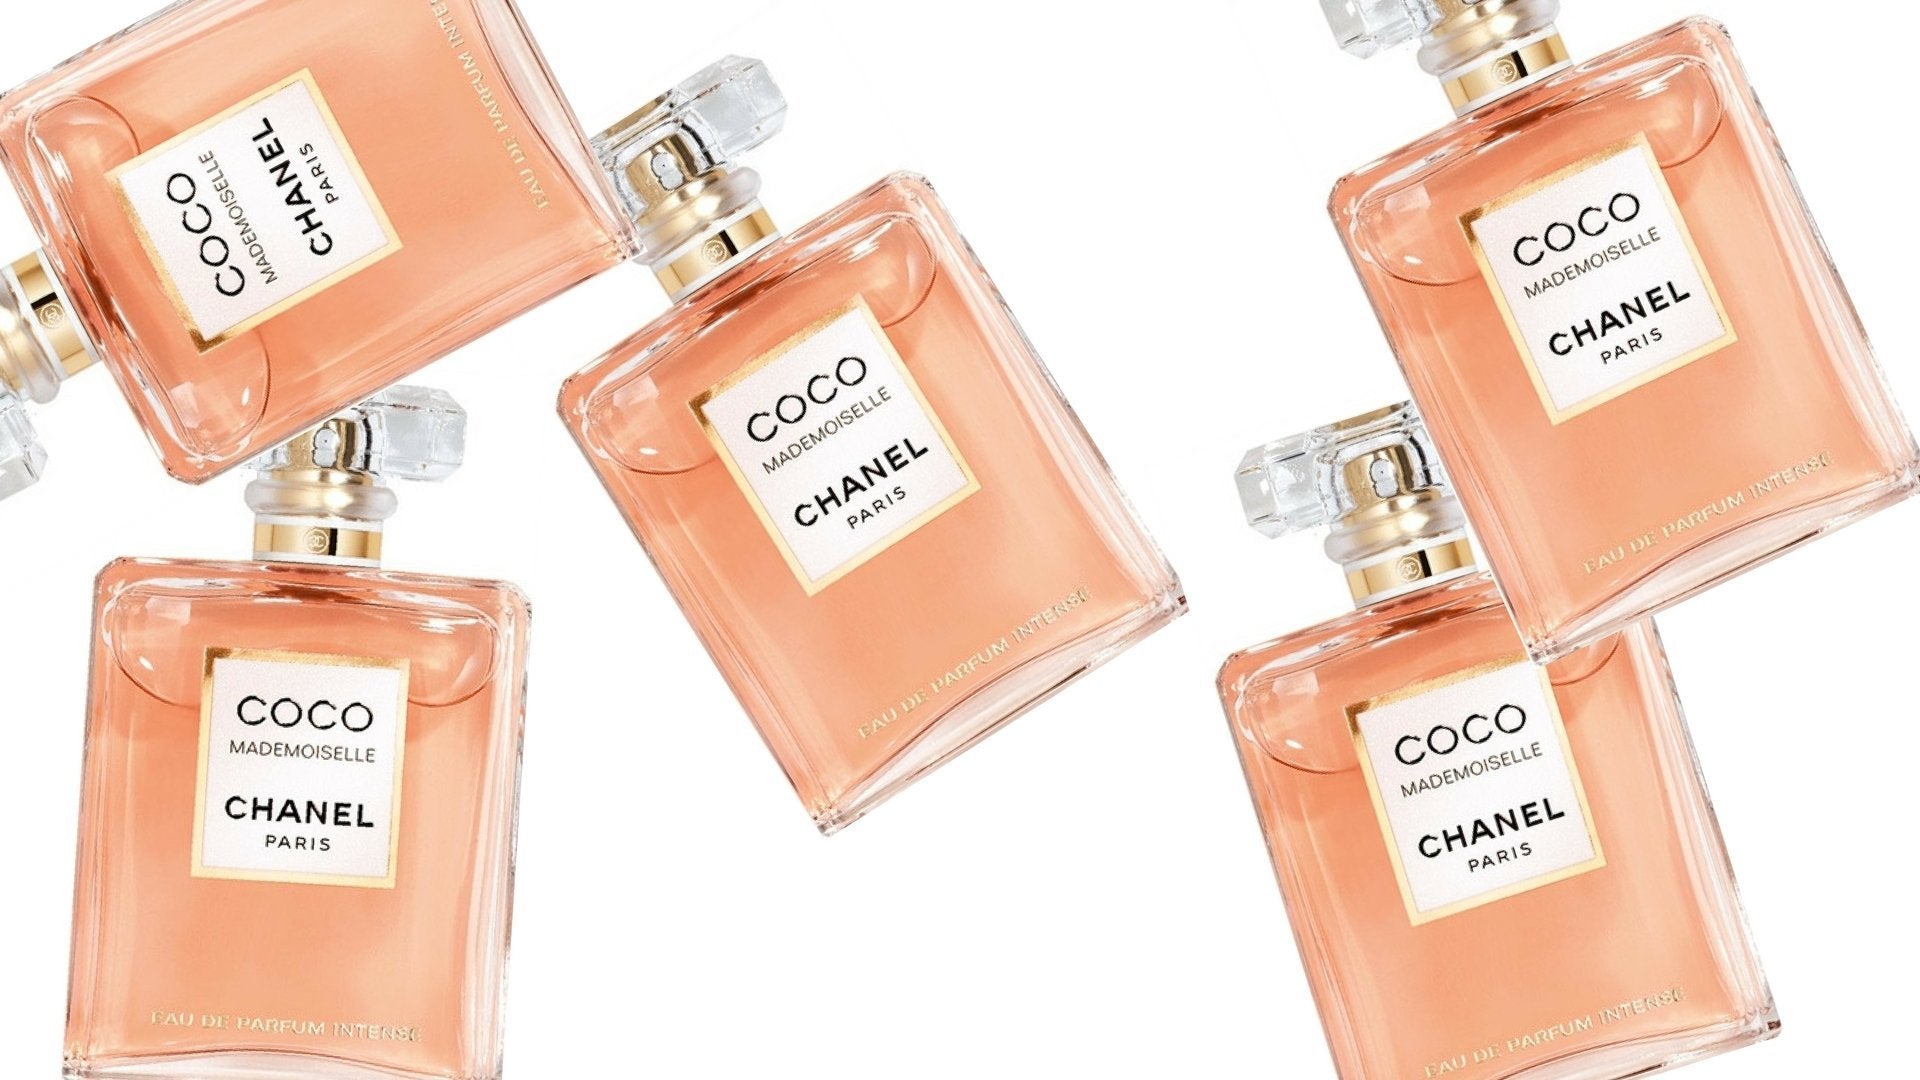 Chanel Coco Mademoiselle perfume alternative for women - composition - TAJ  Brand